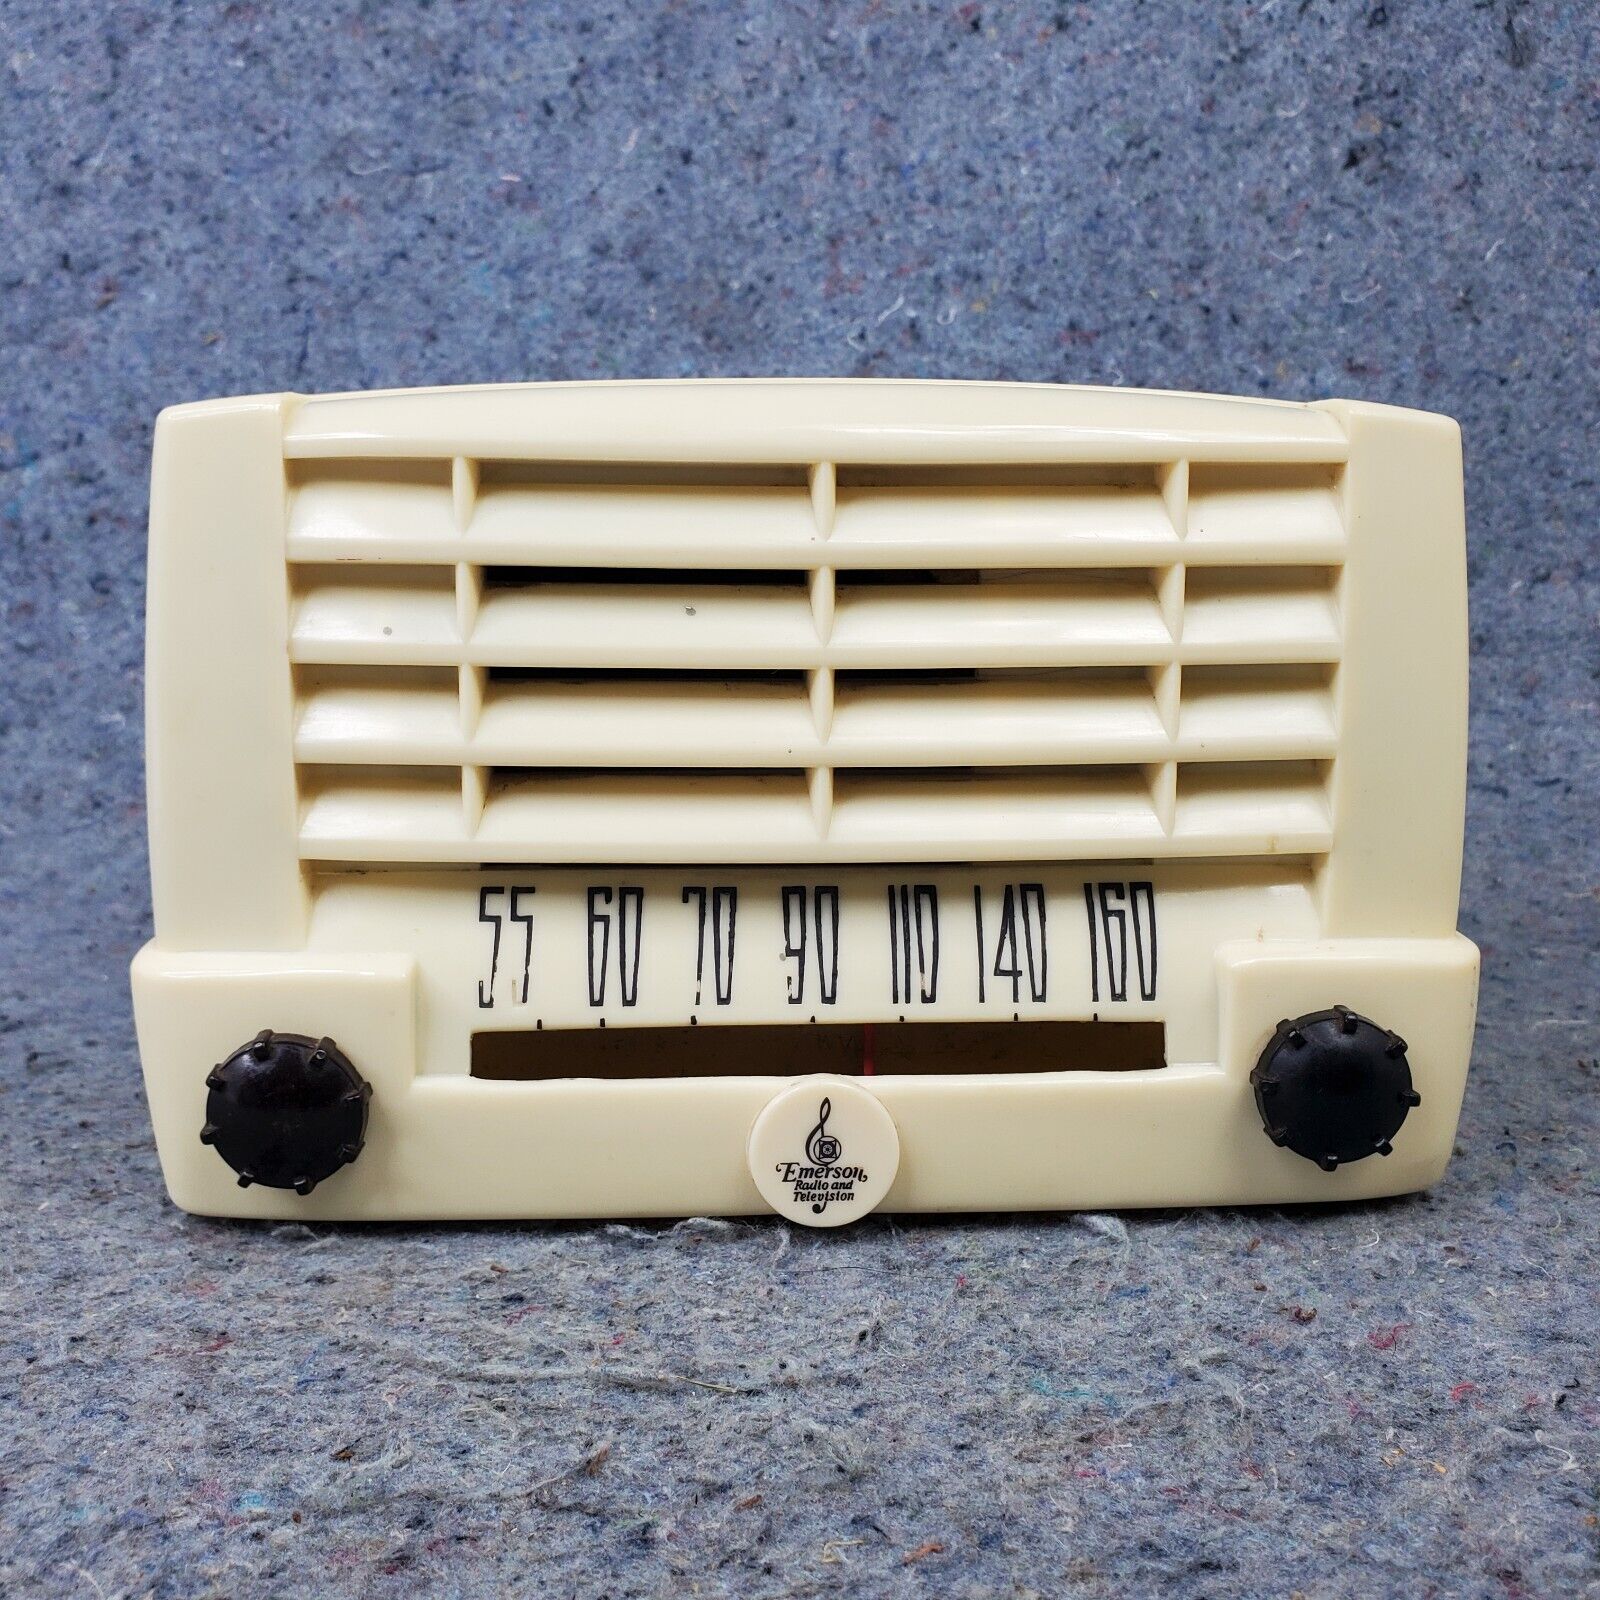 Emerson Tube Radio Model 547 Bakelite Tabletop AM 1940s Vintage White Working